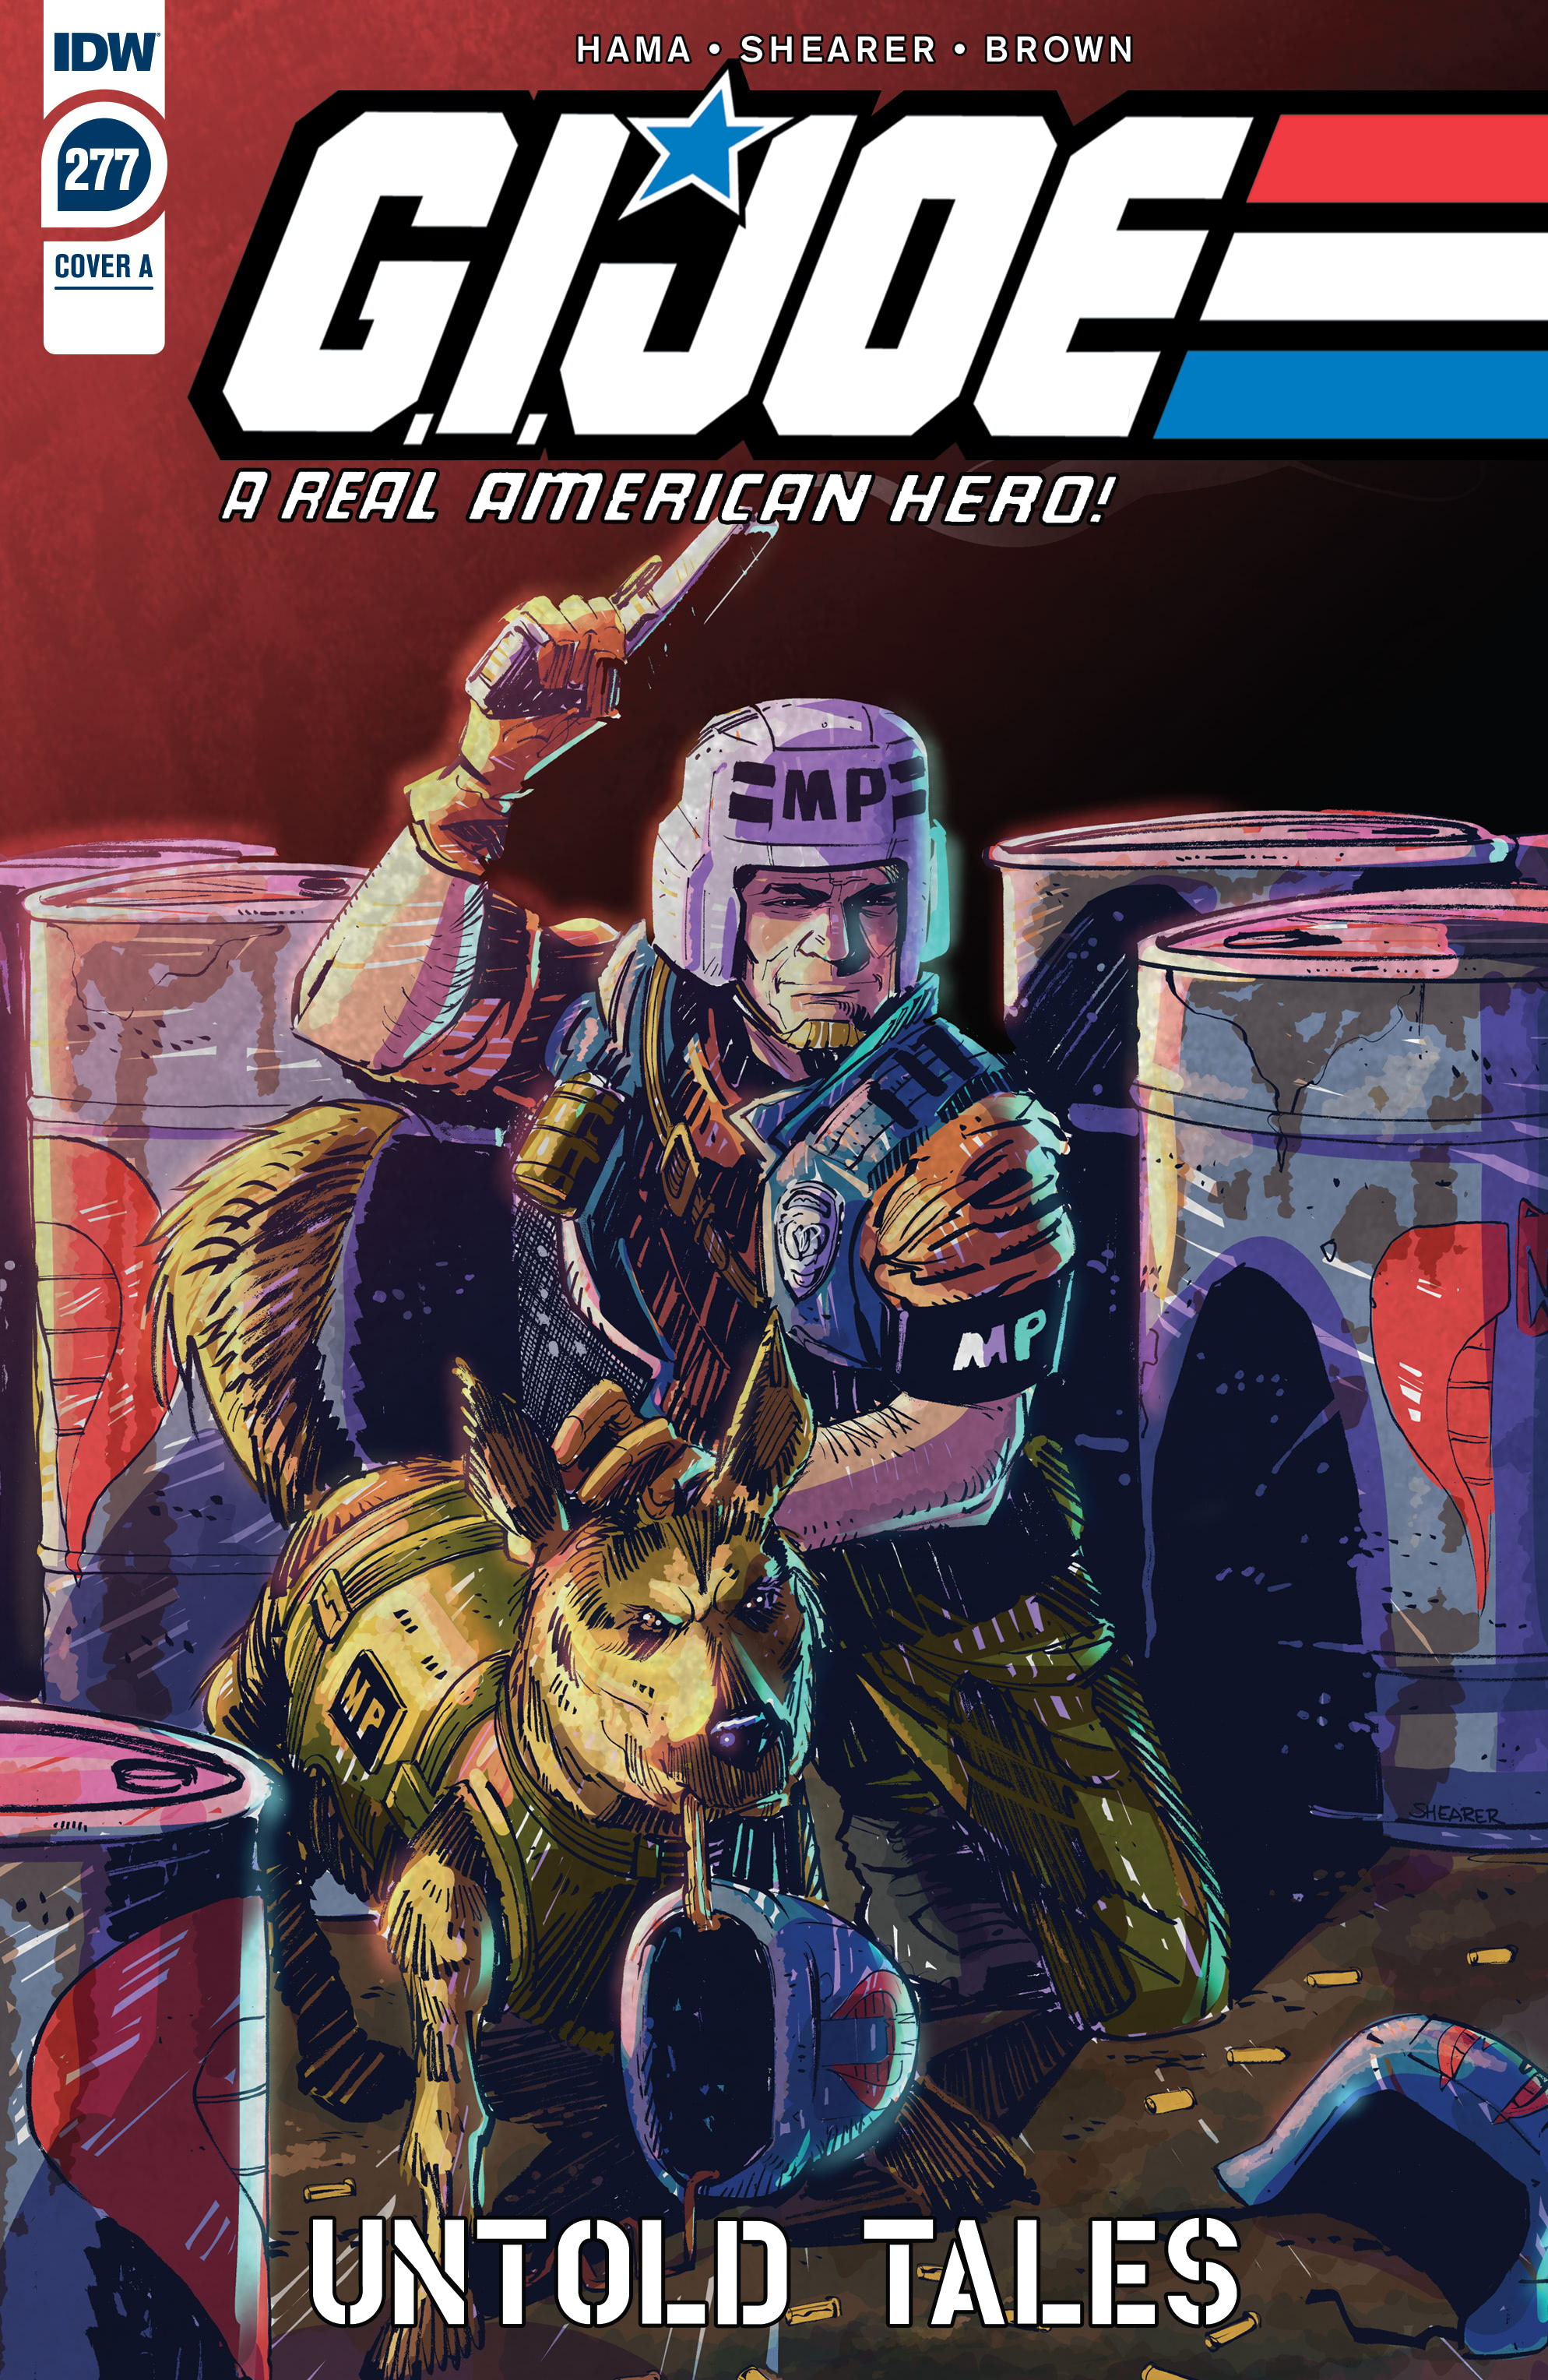 Read online G.I. Joe: A Real American Hero comic -  Issue #277 - 1